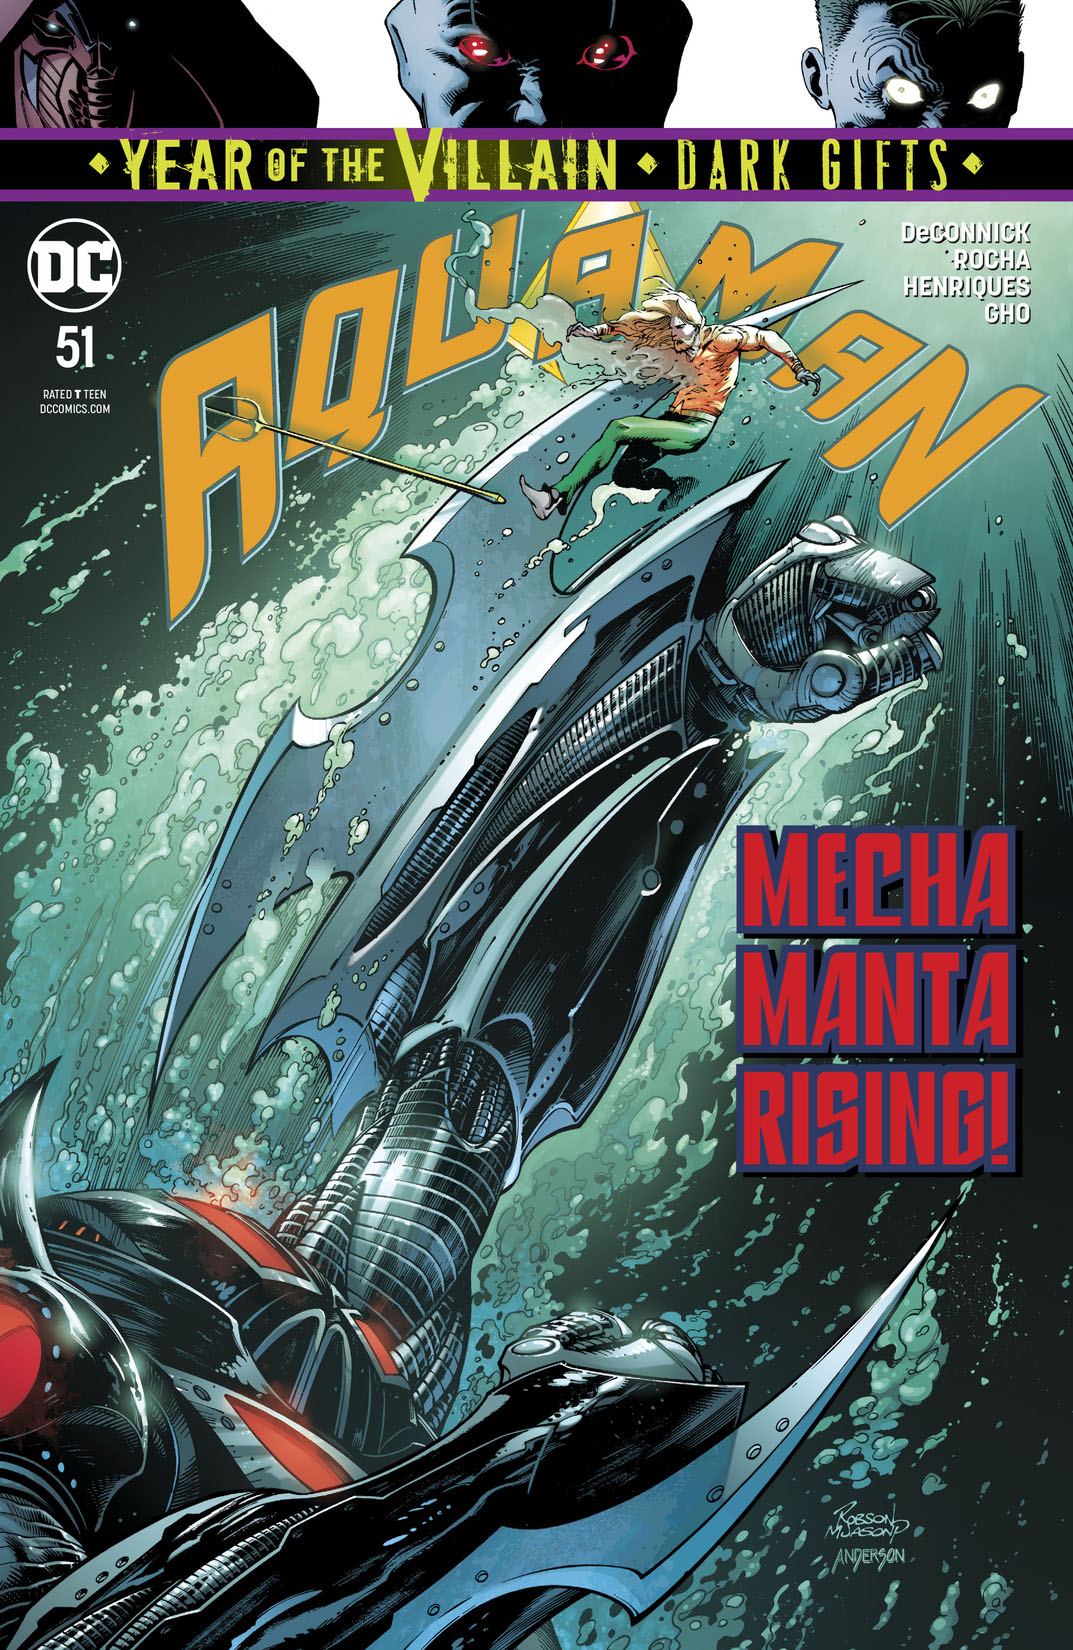 Aquaman (2016-) #51 preview images